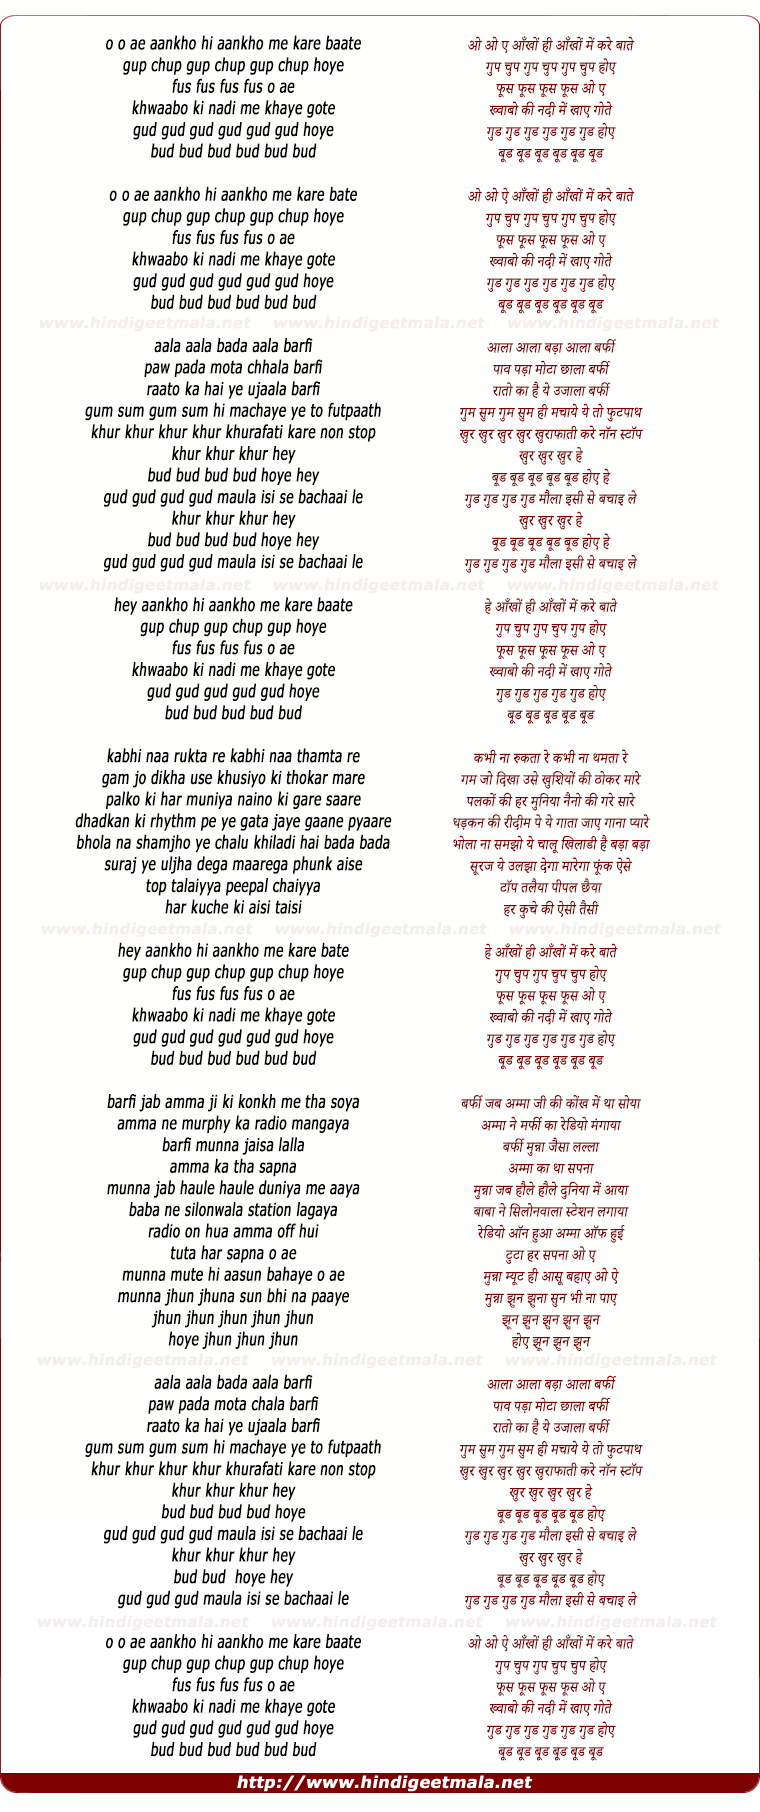 lyrics of song Ala Barfi Kaju Barfi